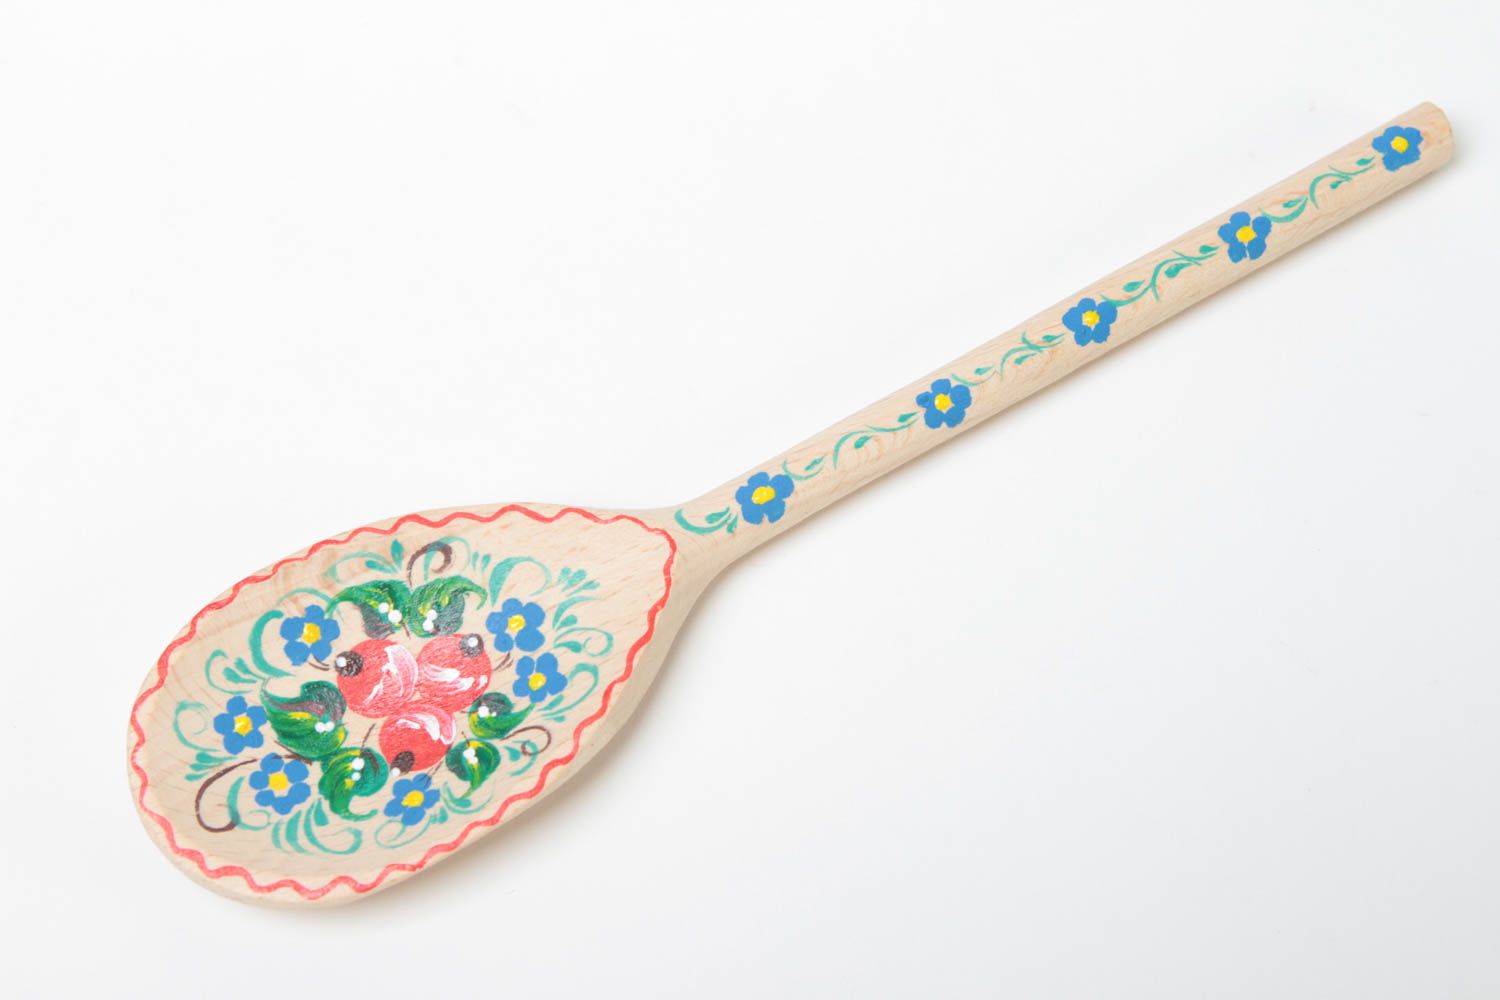 Handmade wooden spoon unusual spoon ideas for home decorative tableware photo 2